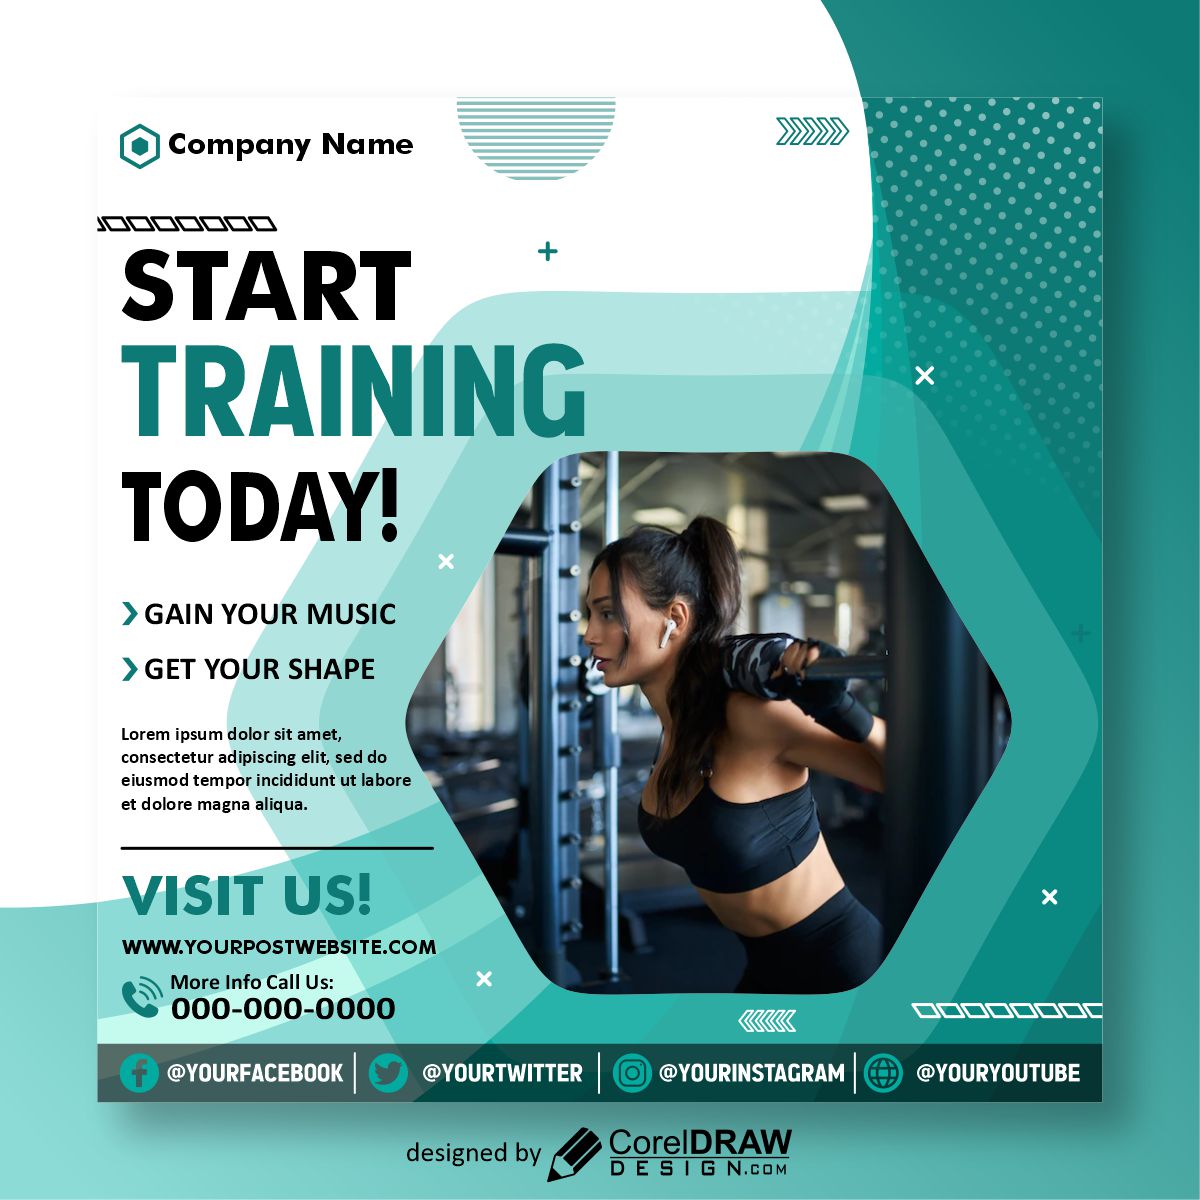 Start Training Today poster vector design